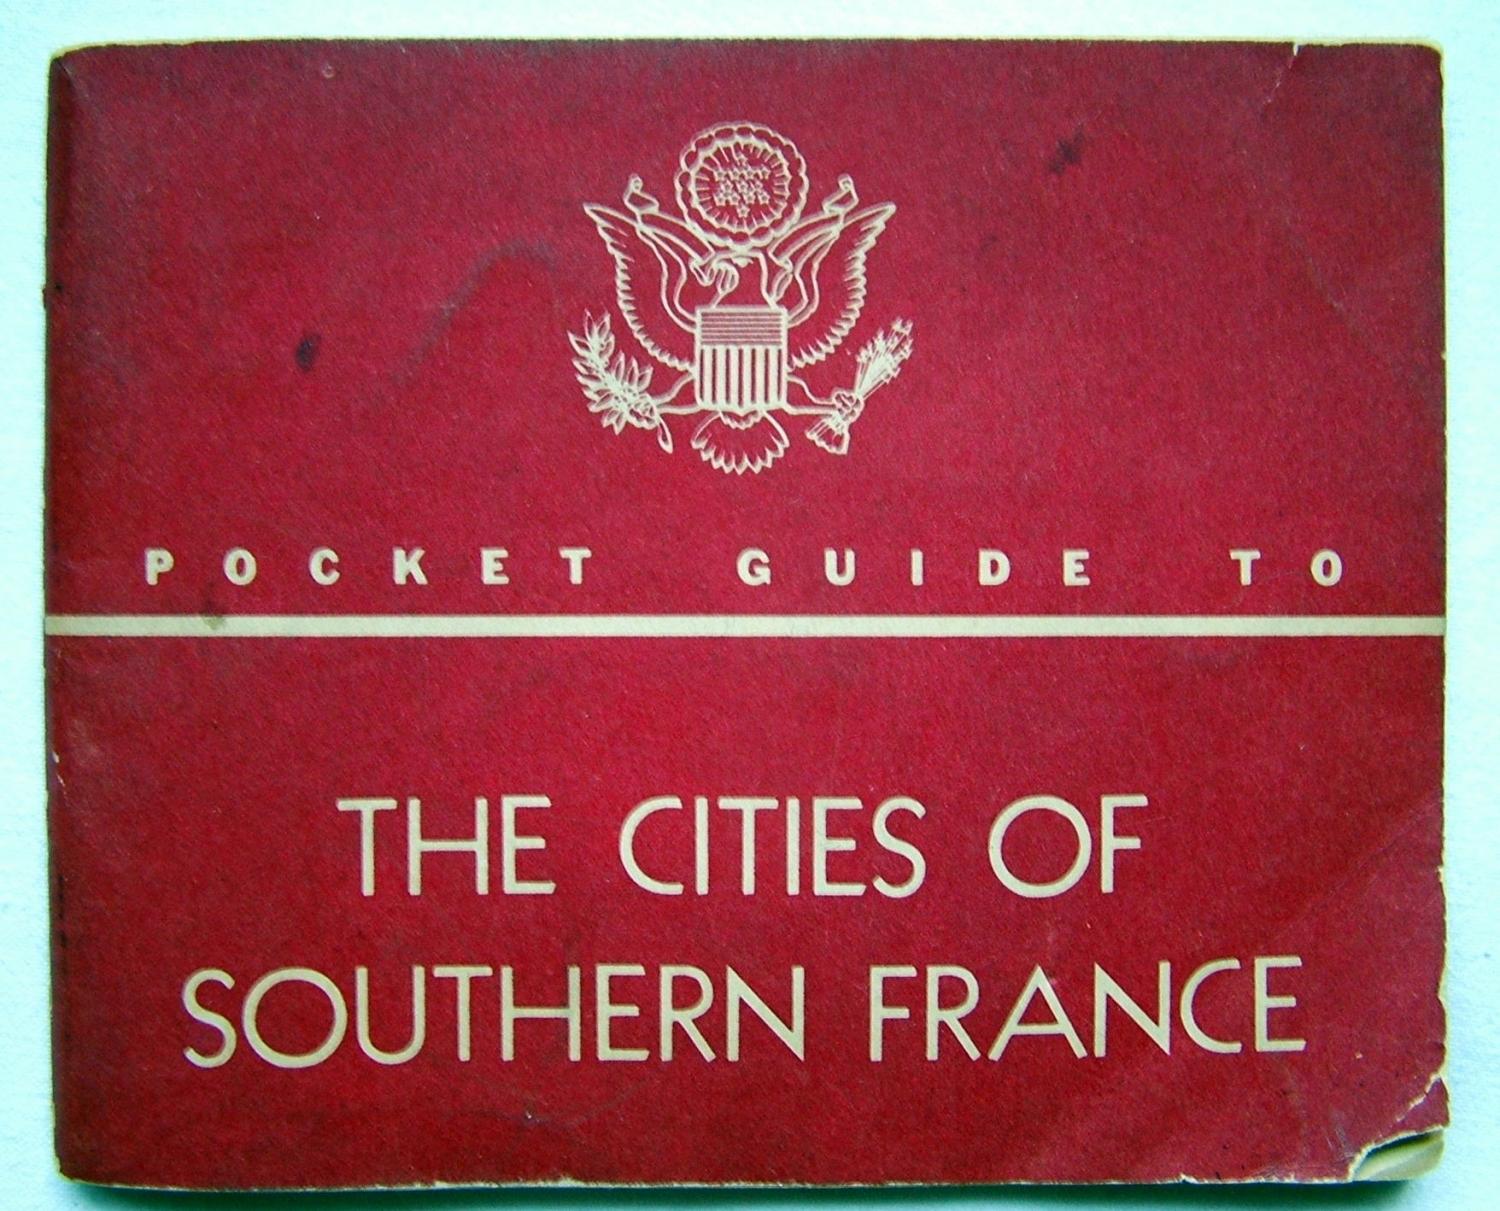 U.S. Army Pocket Guide - Southern France